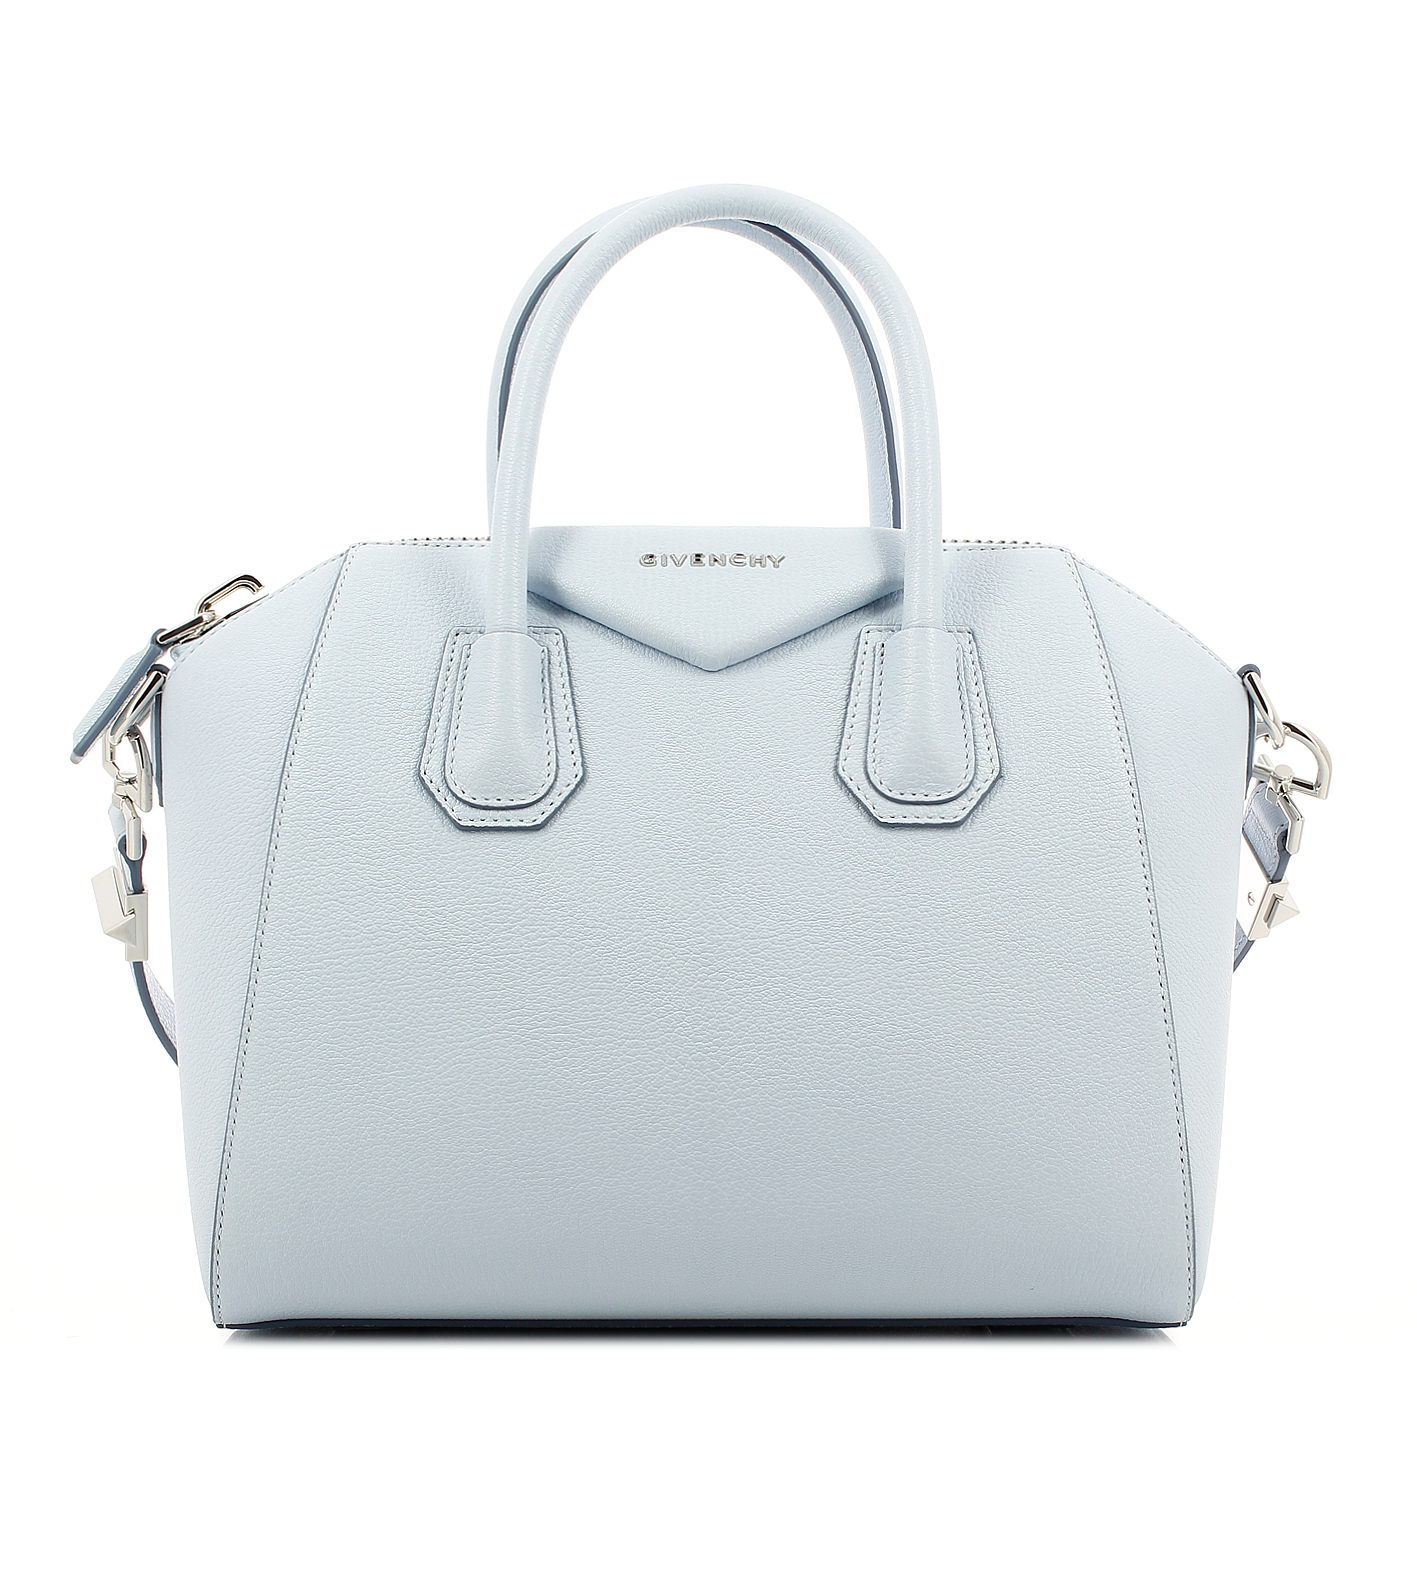 Lyst - Givenchy Light Blue Antigona Small Bag in White